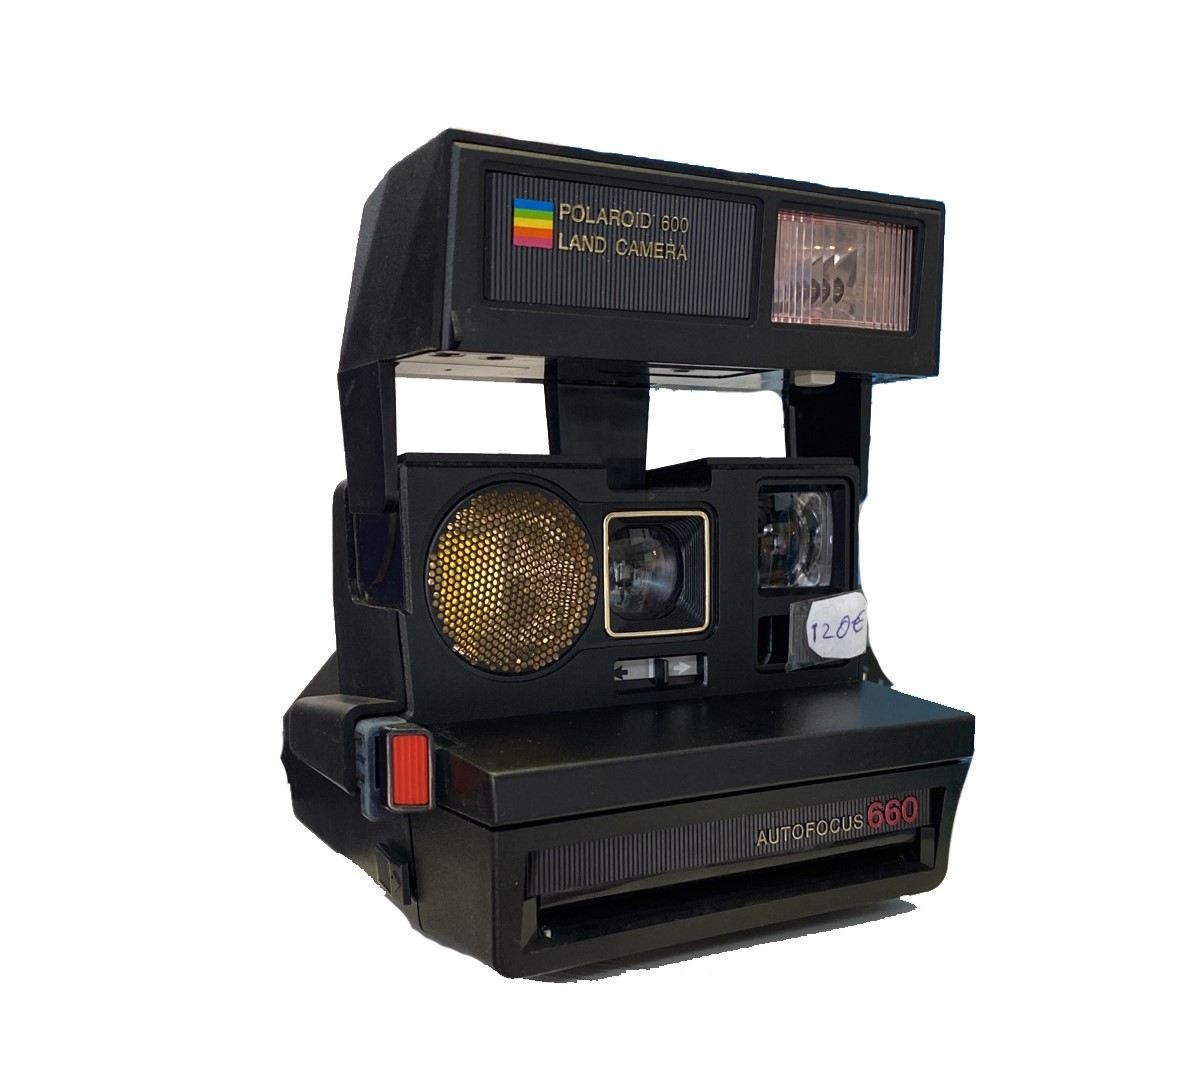 polaroid-sofortbildkamera-zu verkaufen-fotokotti-land-camera-600-autofocus